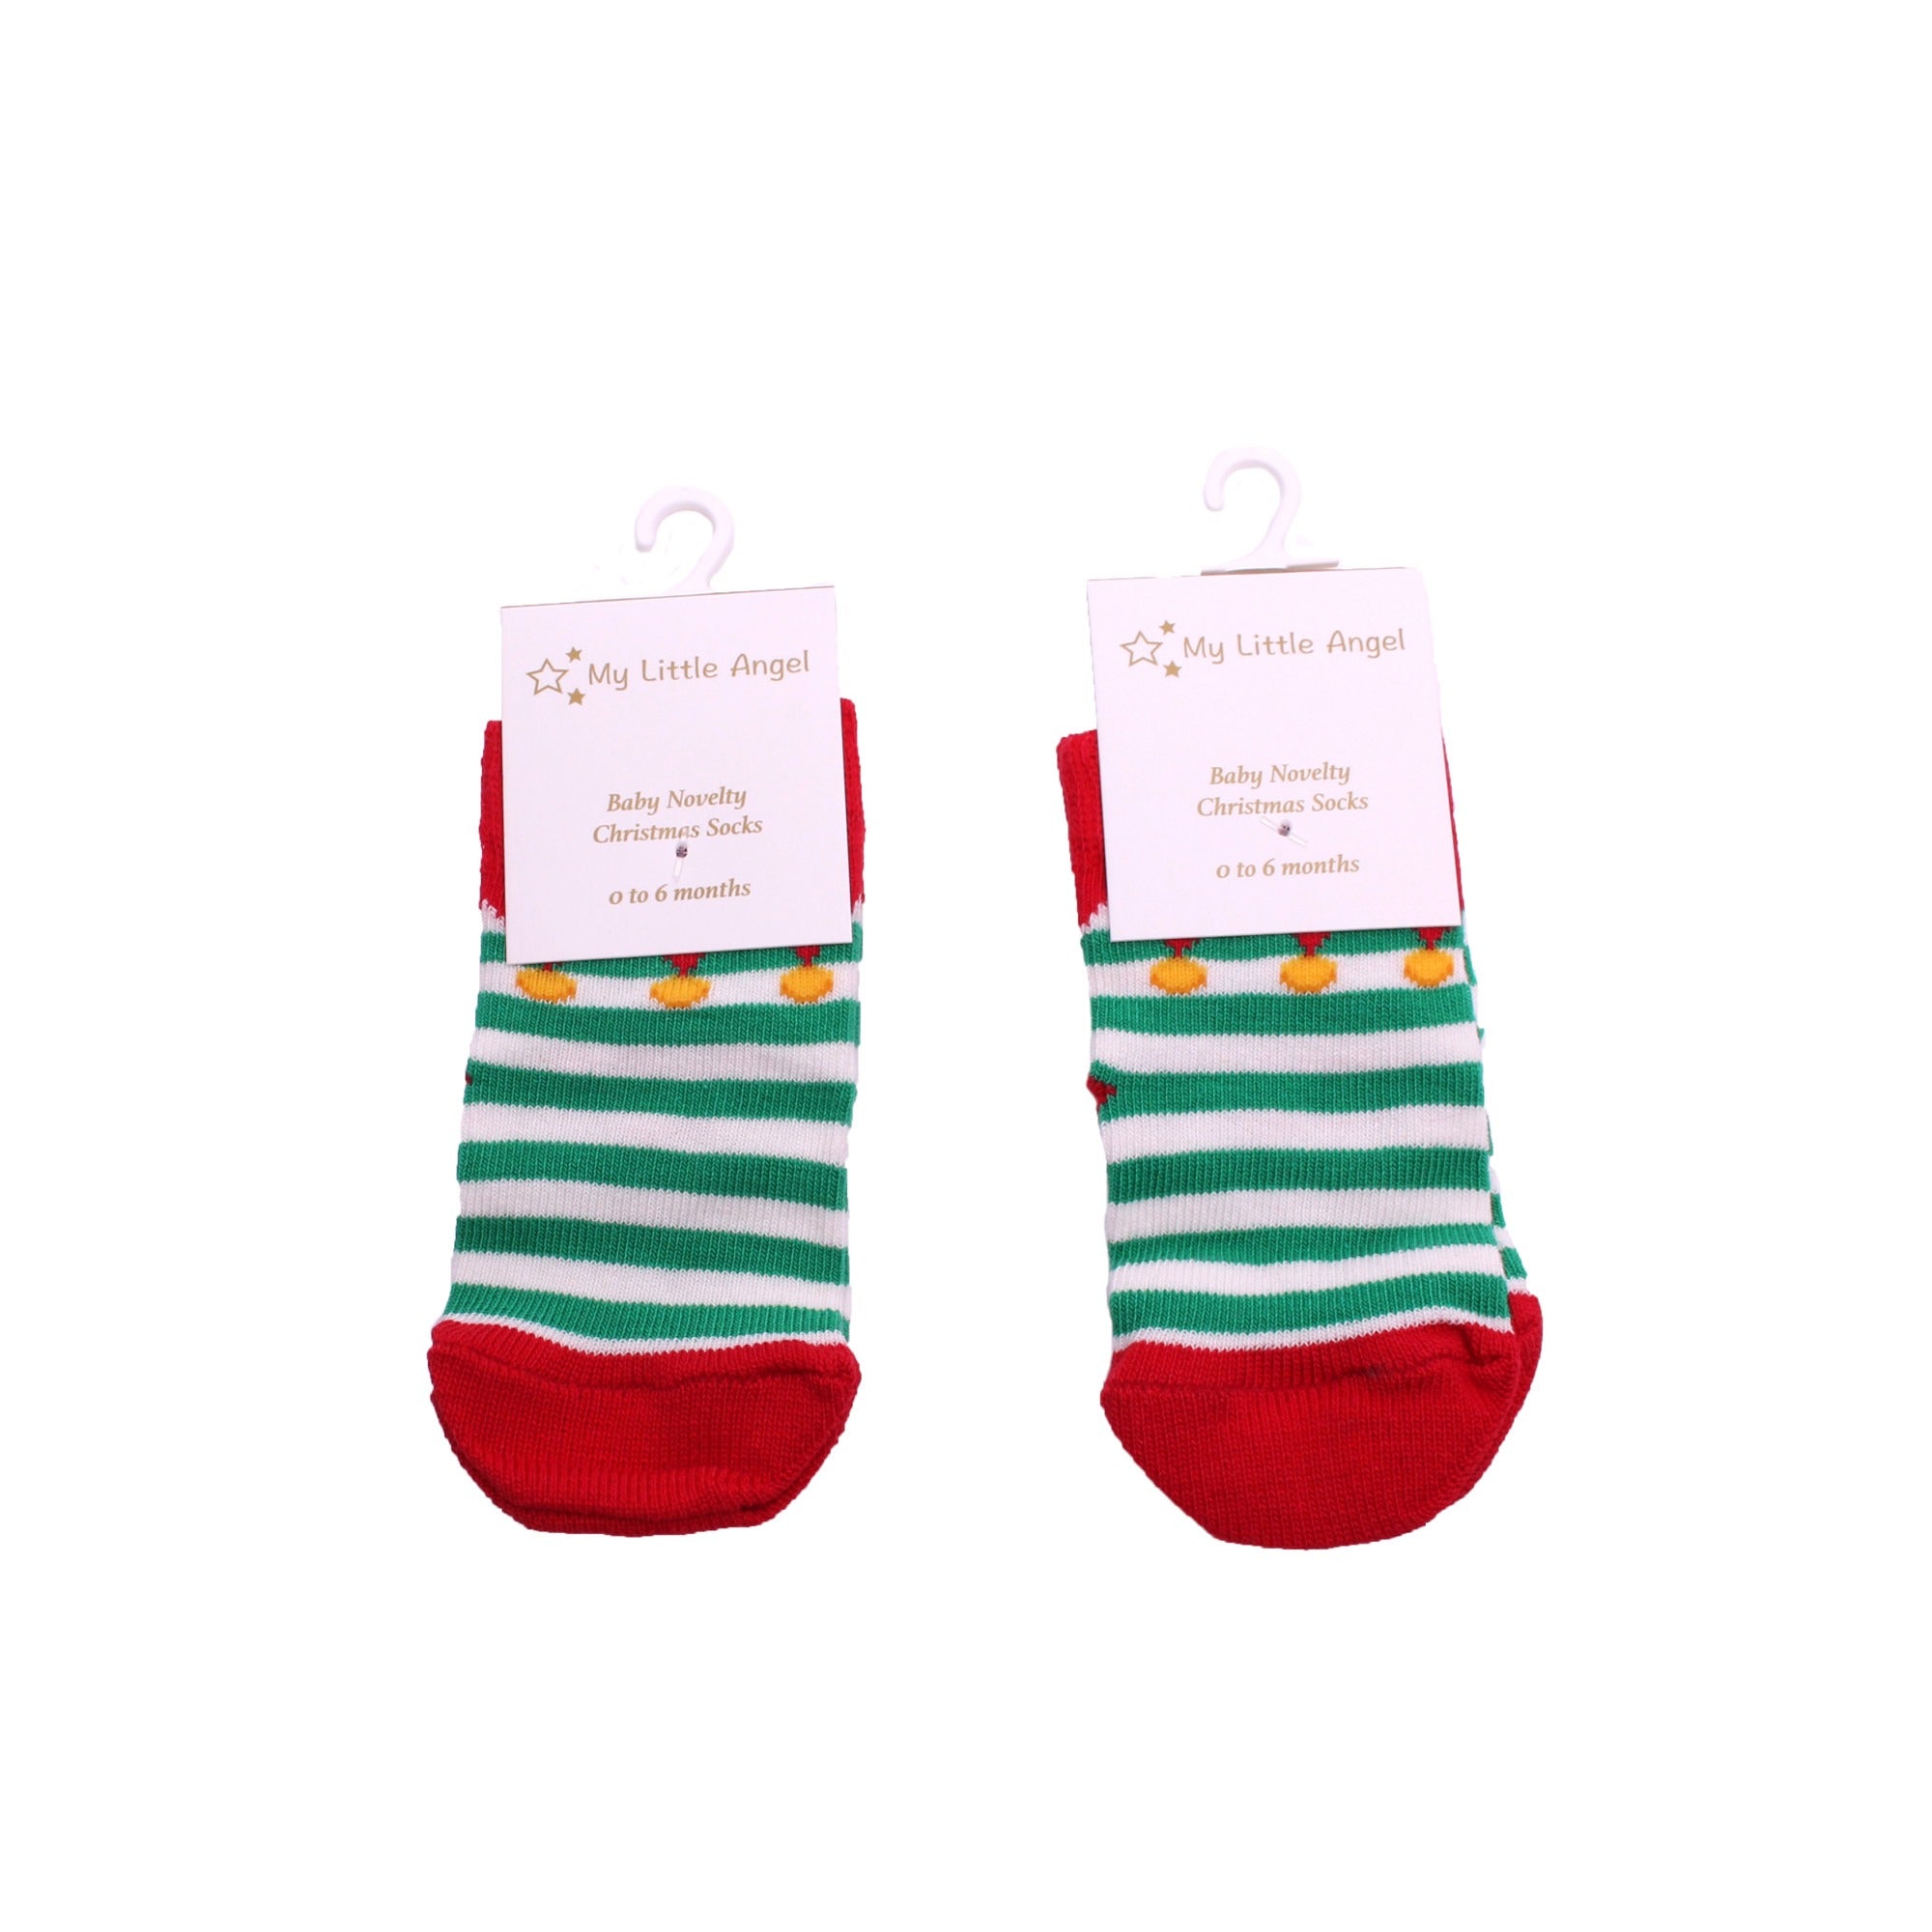 View Cute Elf Christmas Socks 06m information